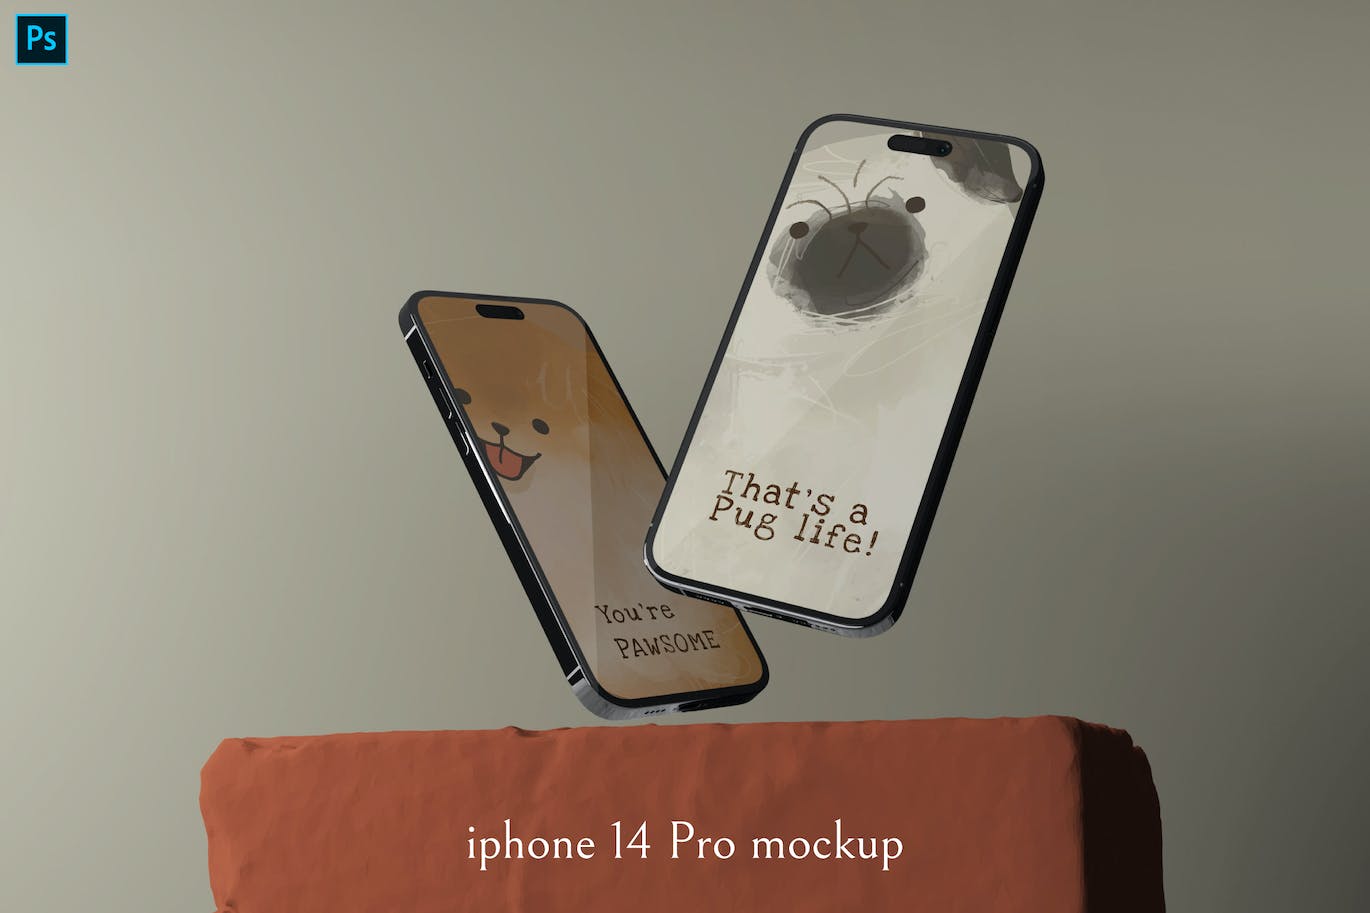 iphone 14 Pro手机效果图样机 iphone 14 Pro mockup 样机素材 第1张